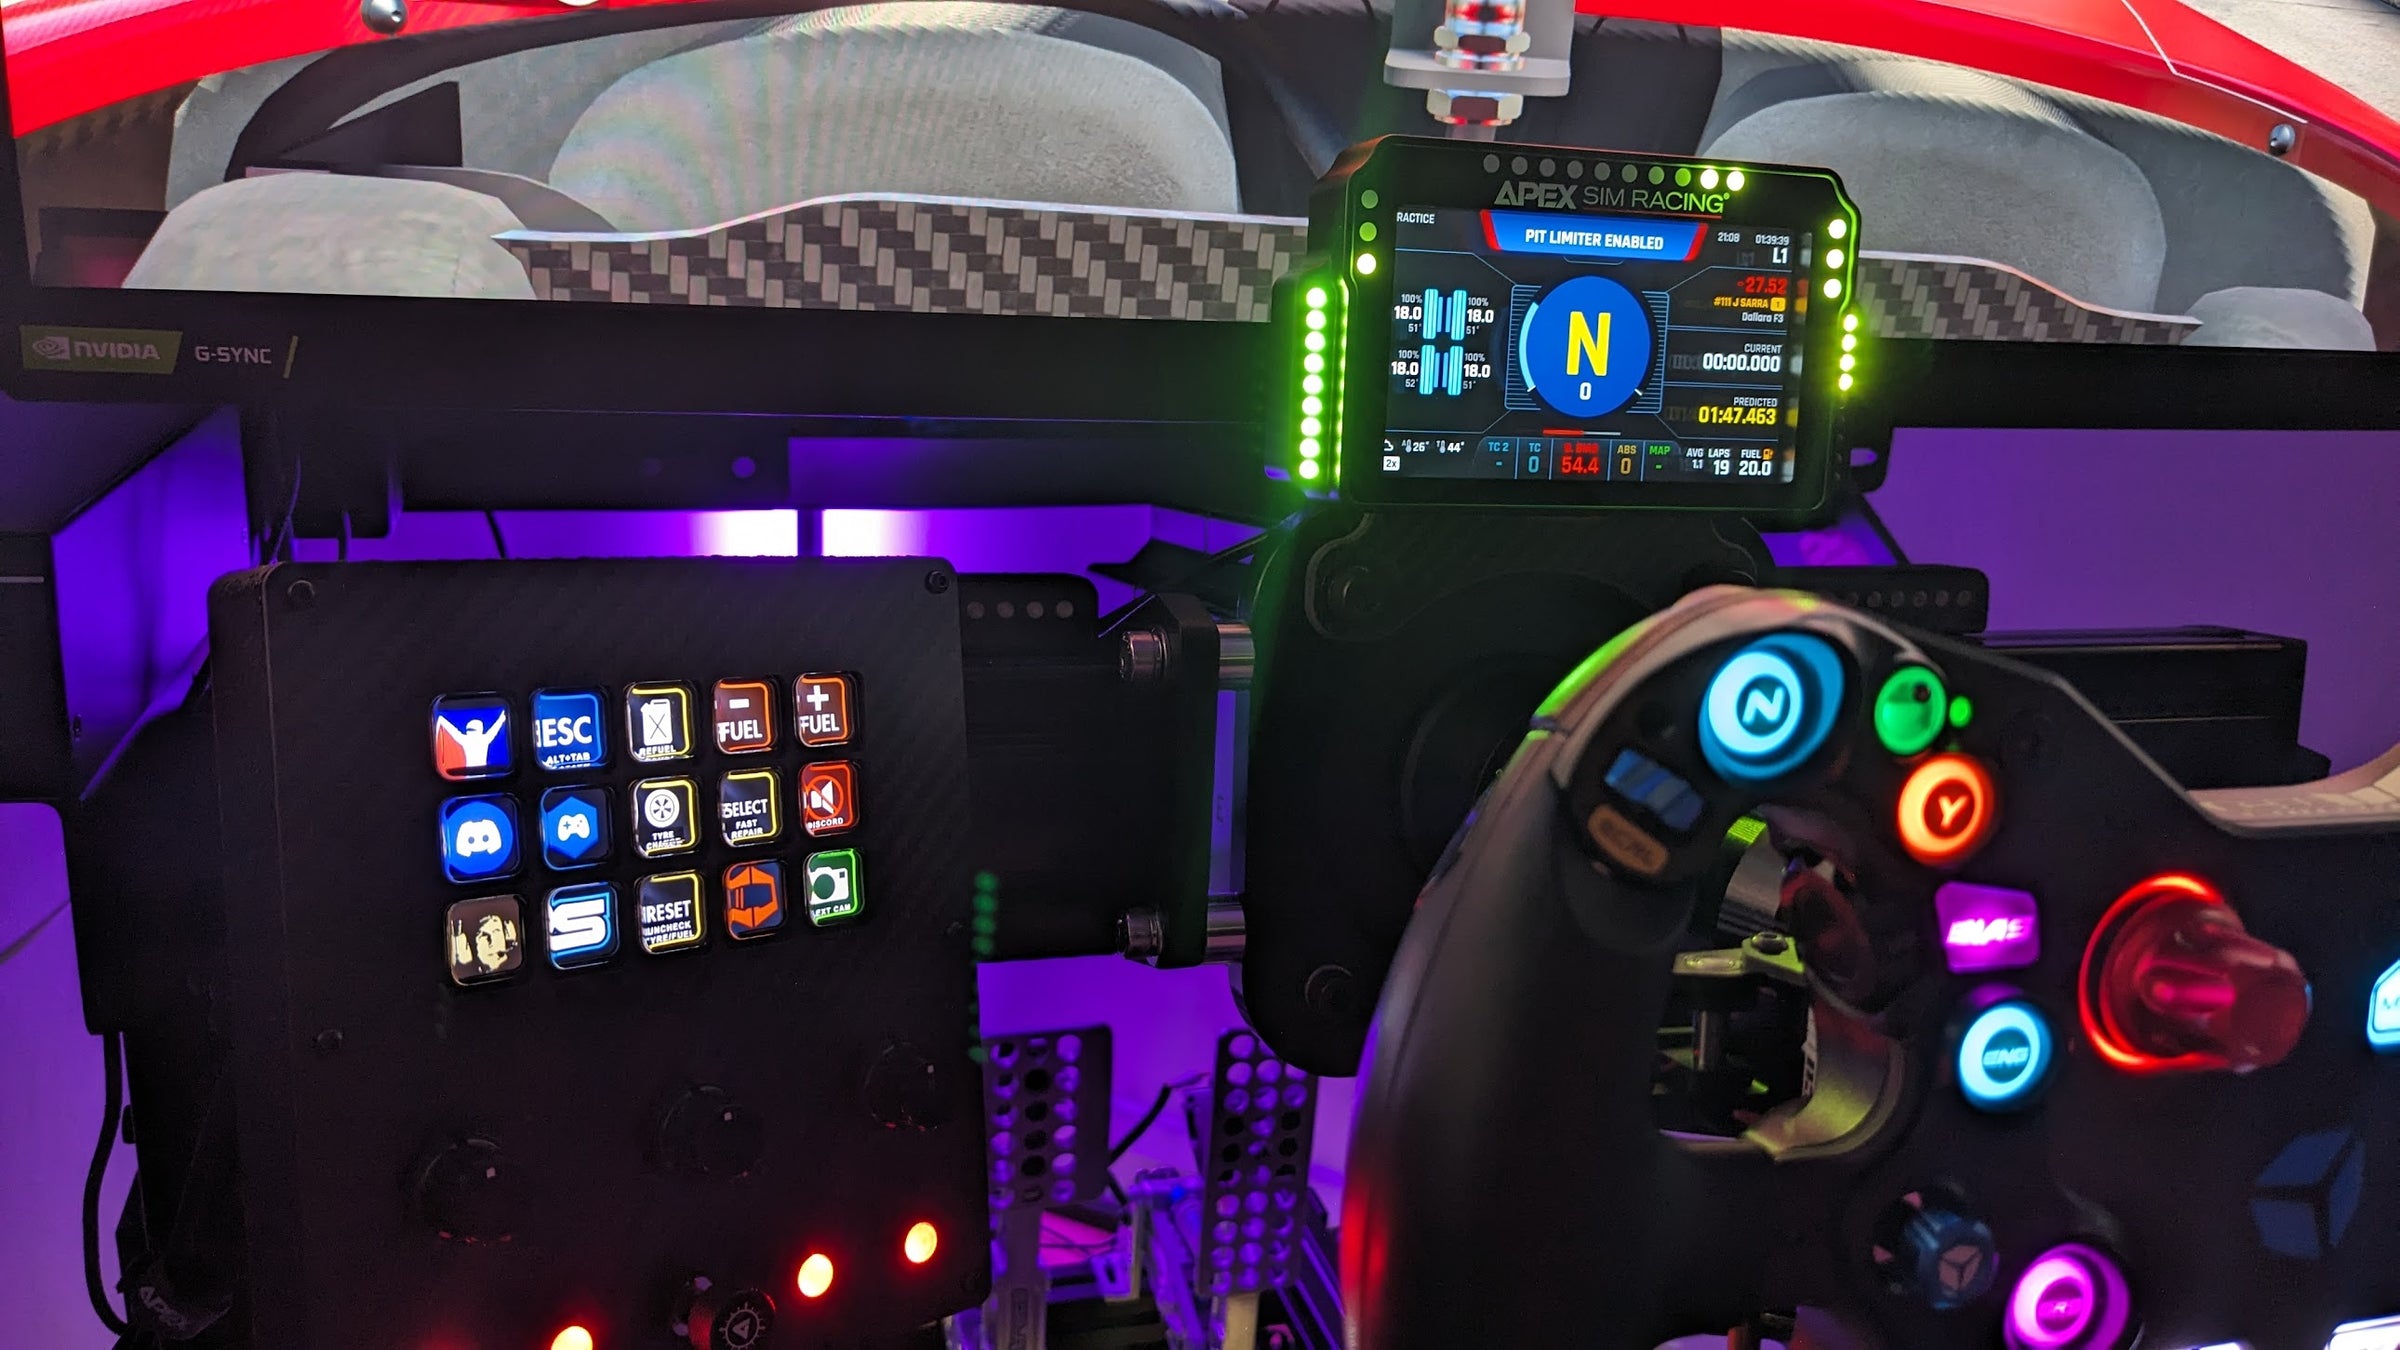 Apex Sim Racing - We have the sim racing gear you need